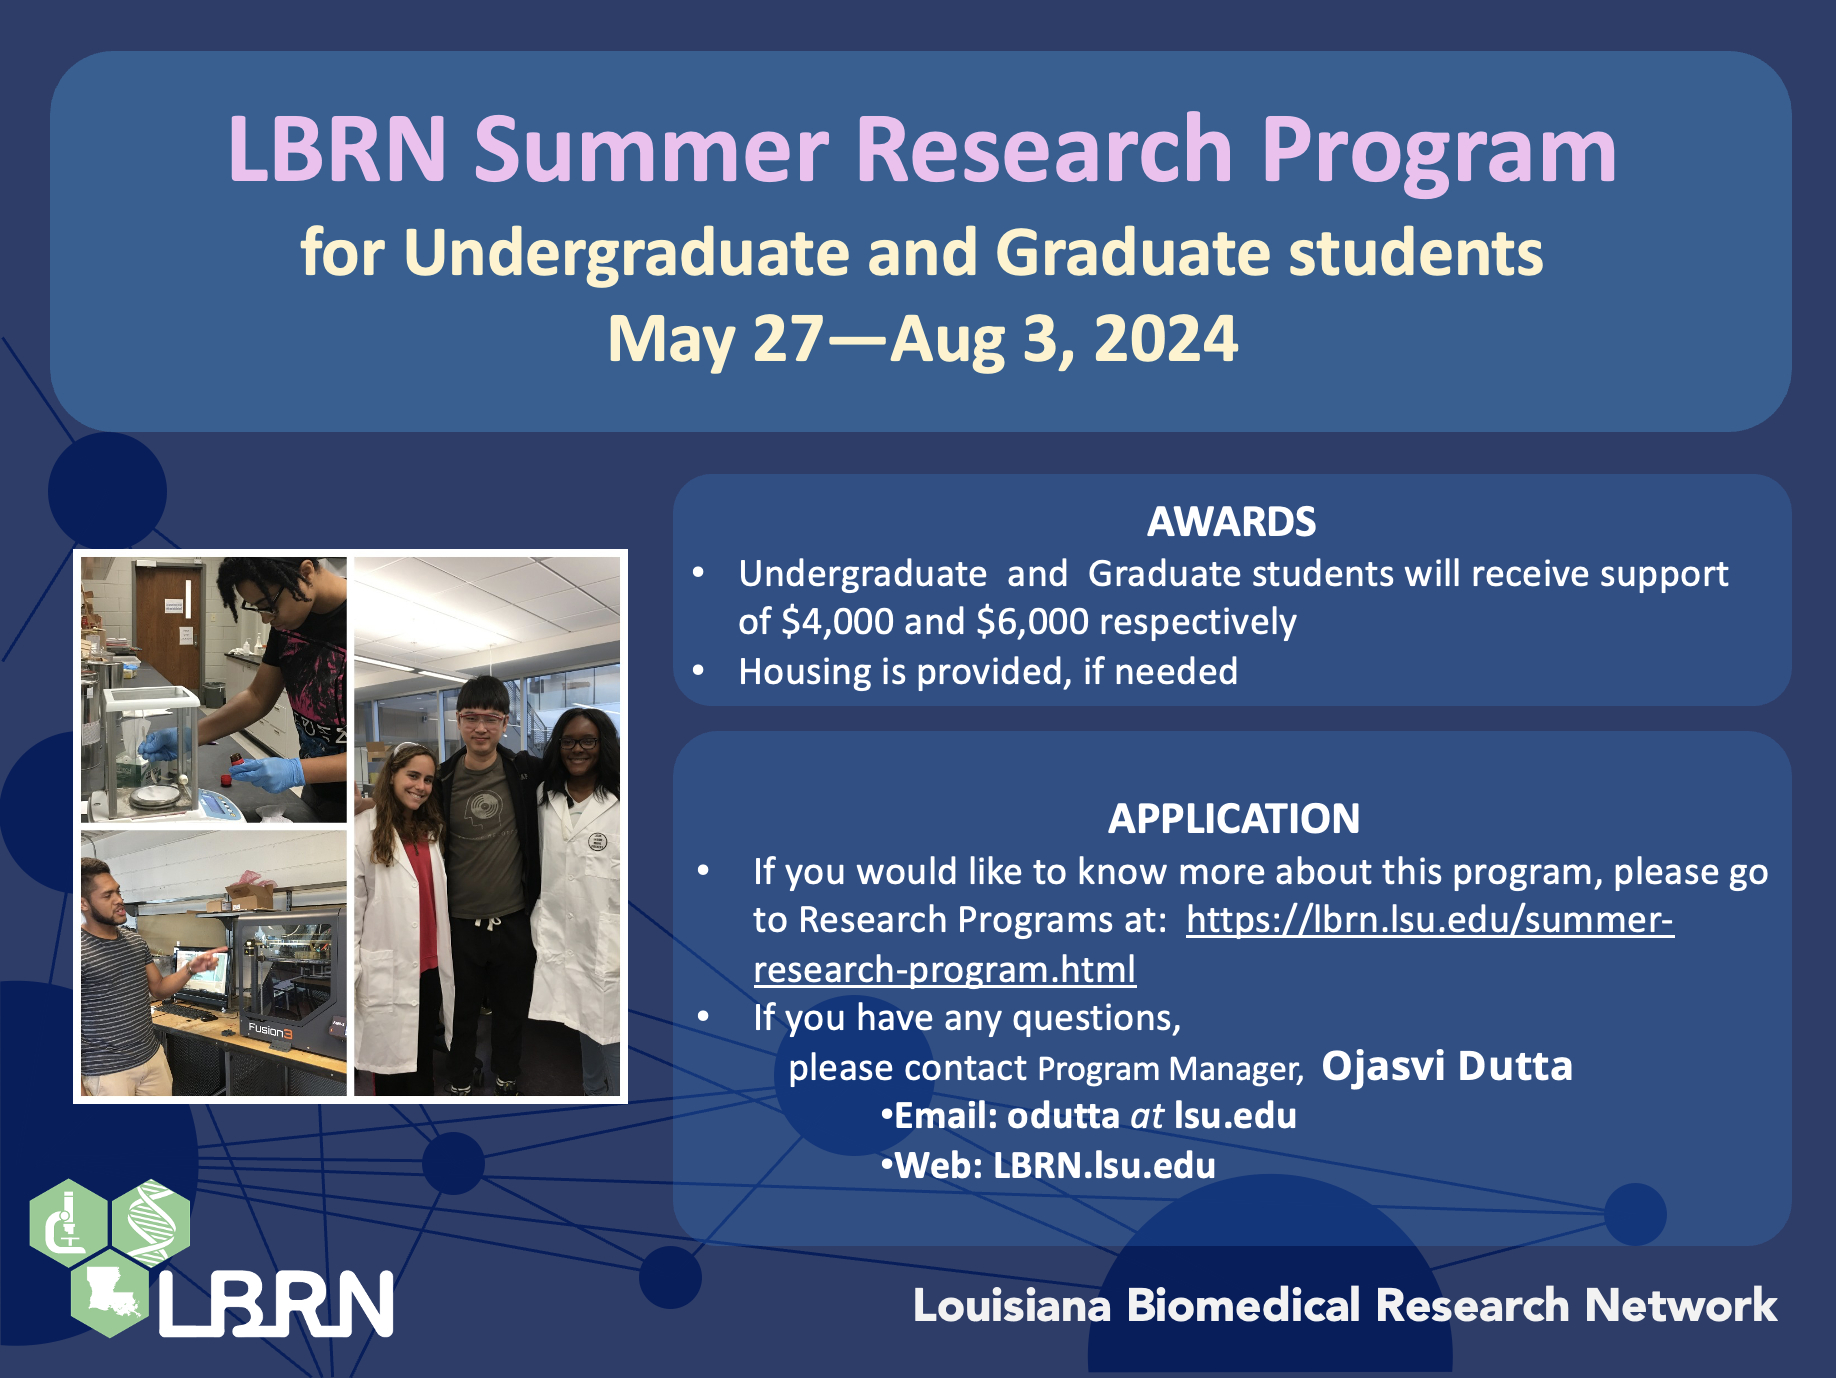 LBRN Summer Research Program